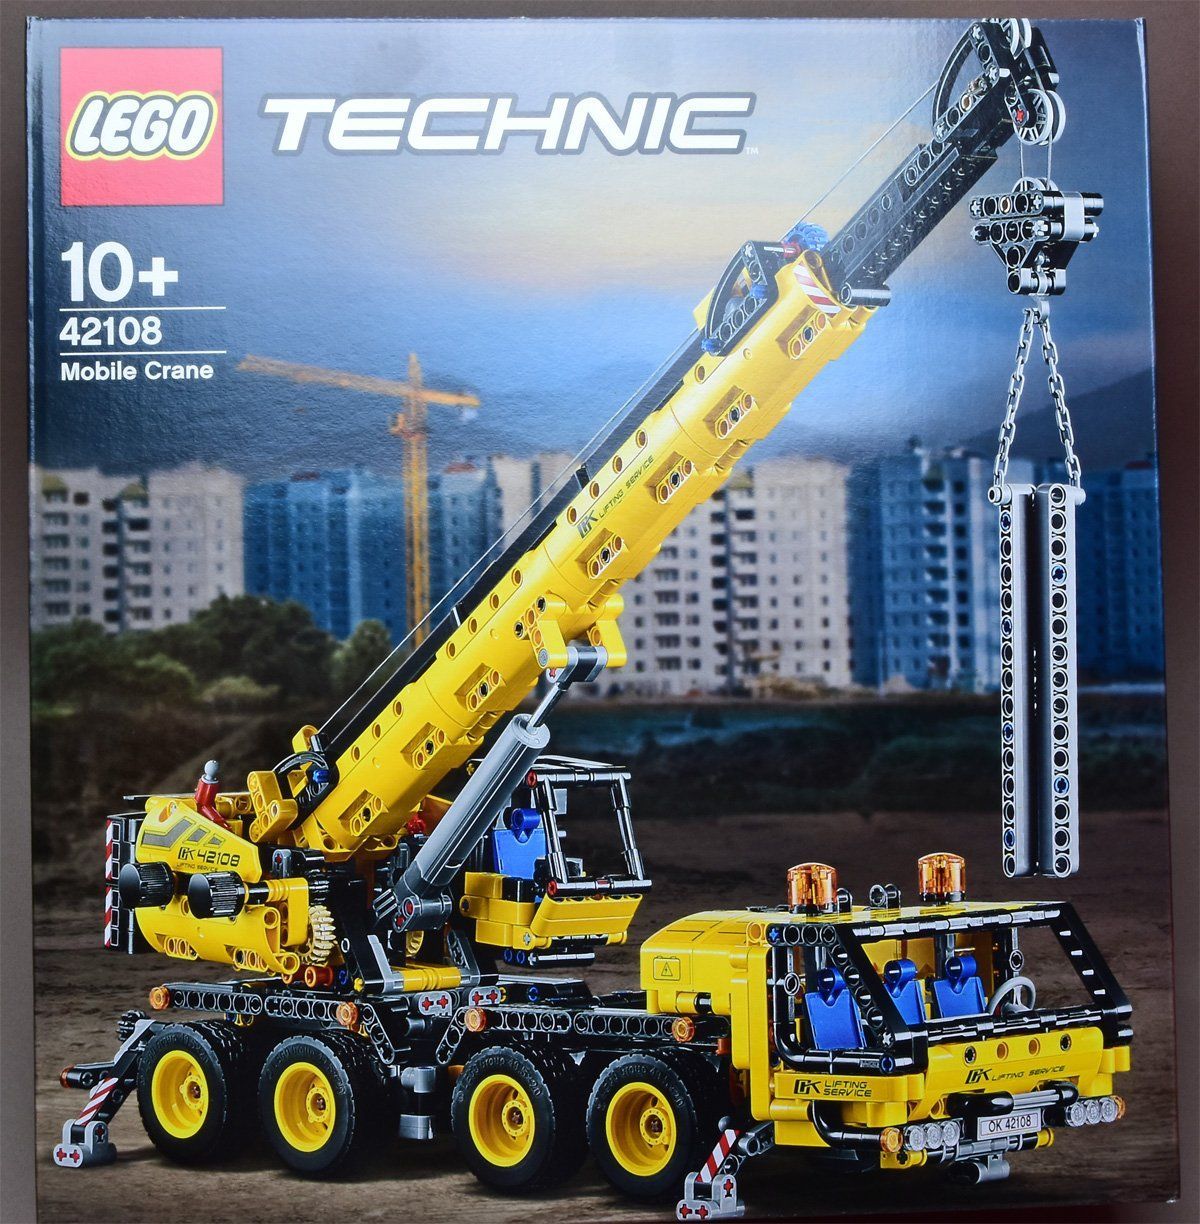 LEGO Technic 42108 Autokran im Review | PROMOBRICKS - Der ...